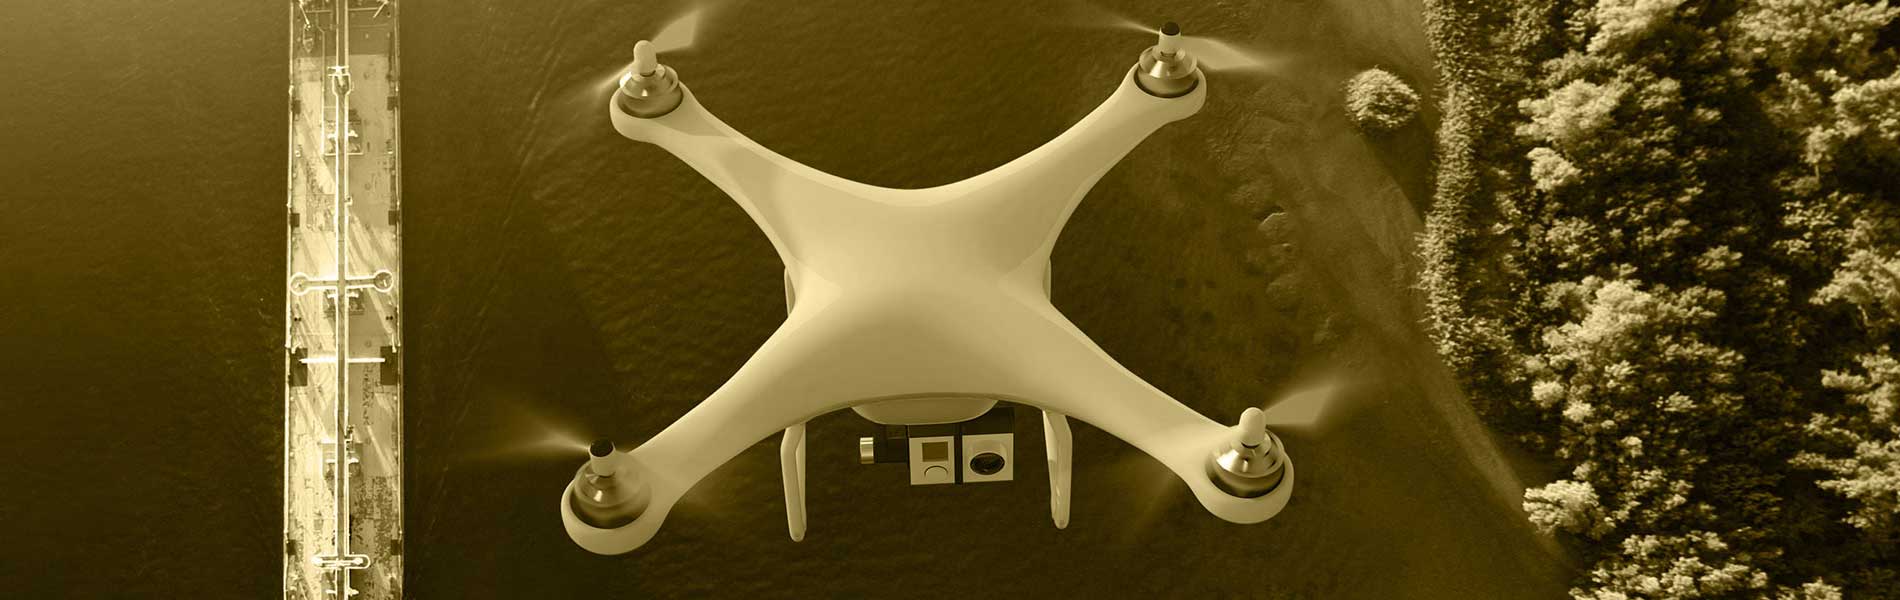 Film pilote de drone Fos-Sur-Mer (13270)